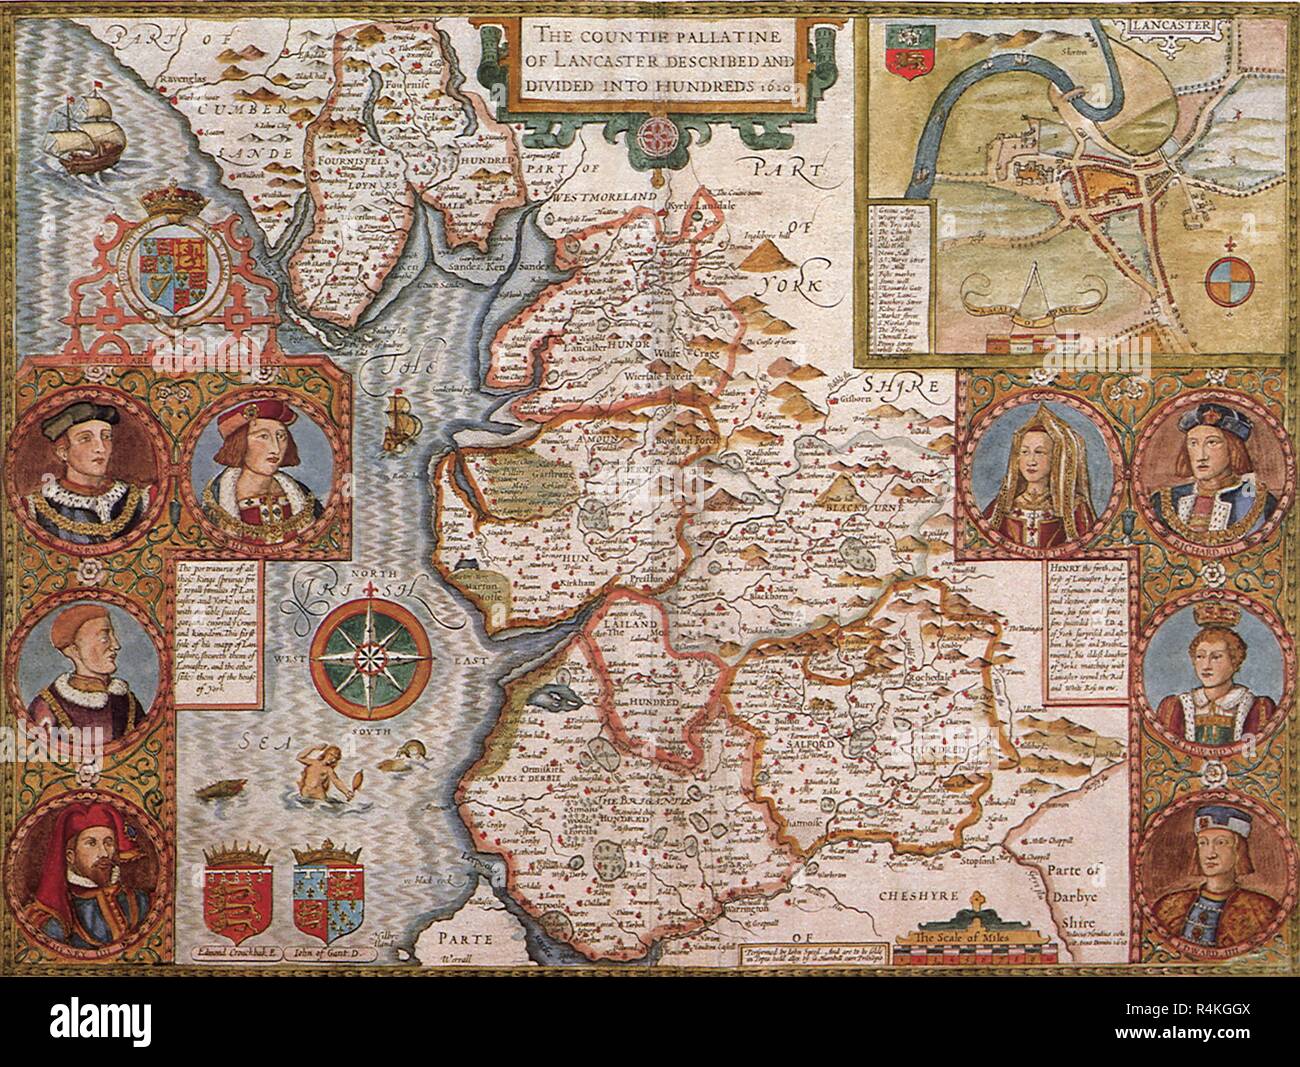 Alte Karte, Lancashire, 1611, Jodocus Hondius,. Stockfoto